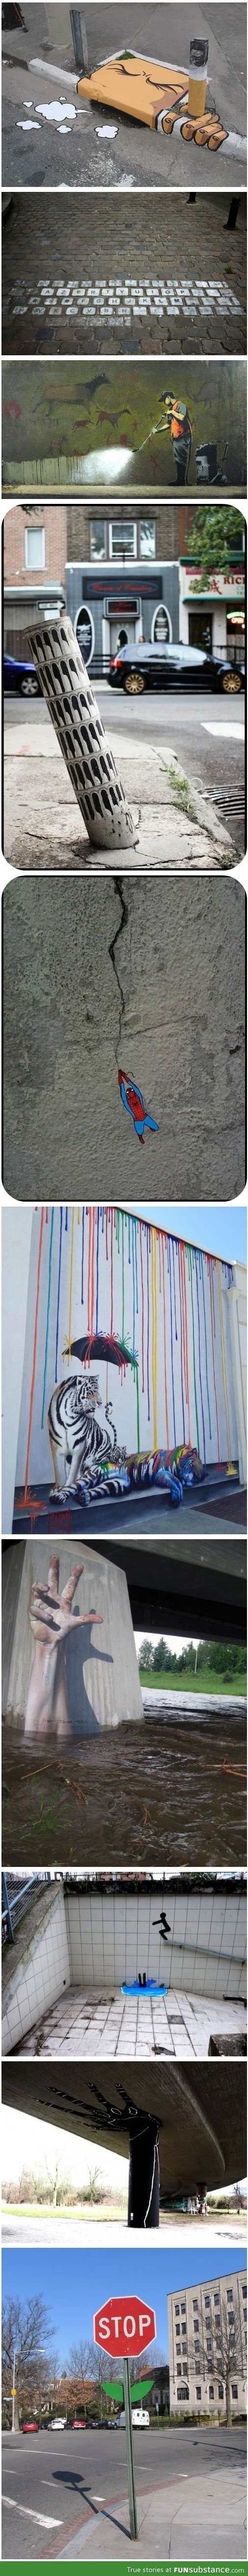 Creative street art